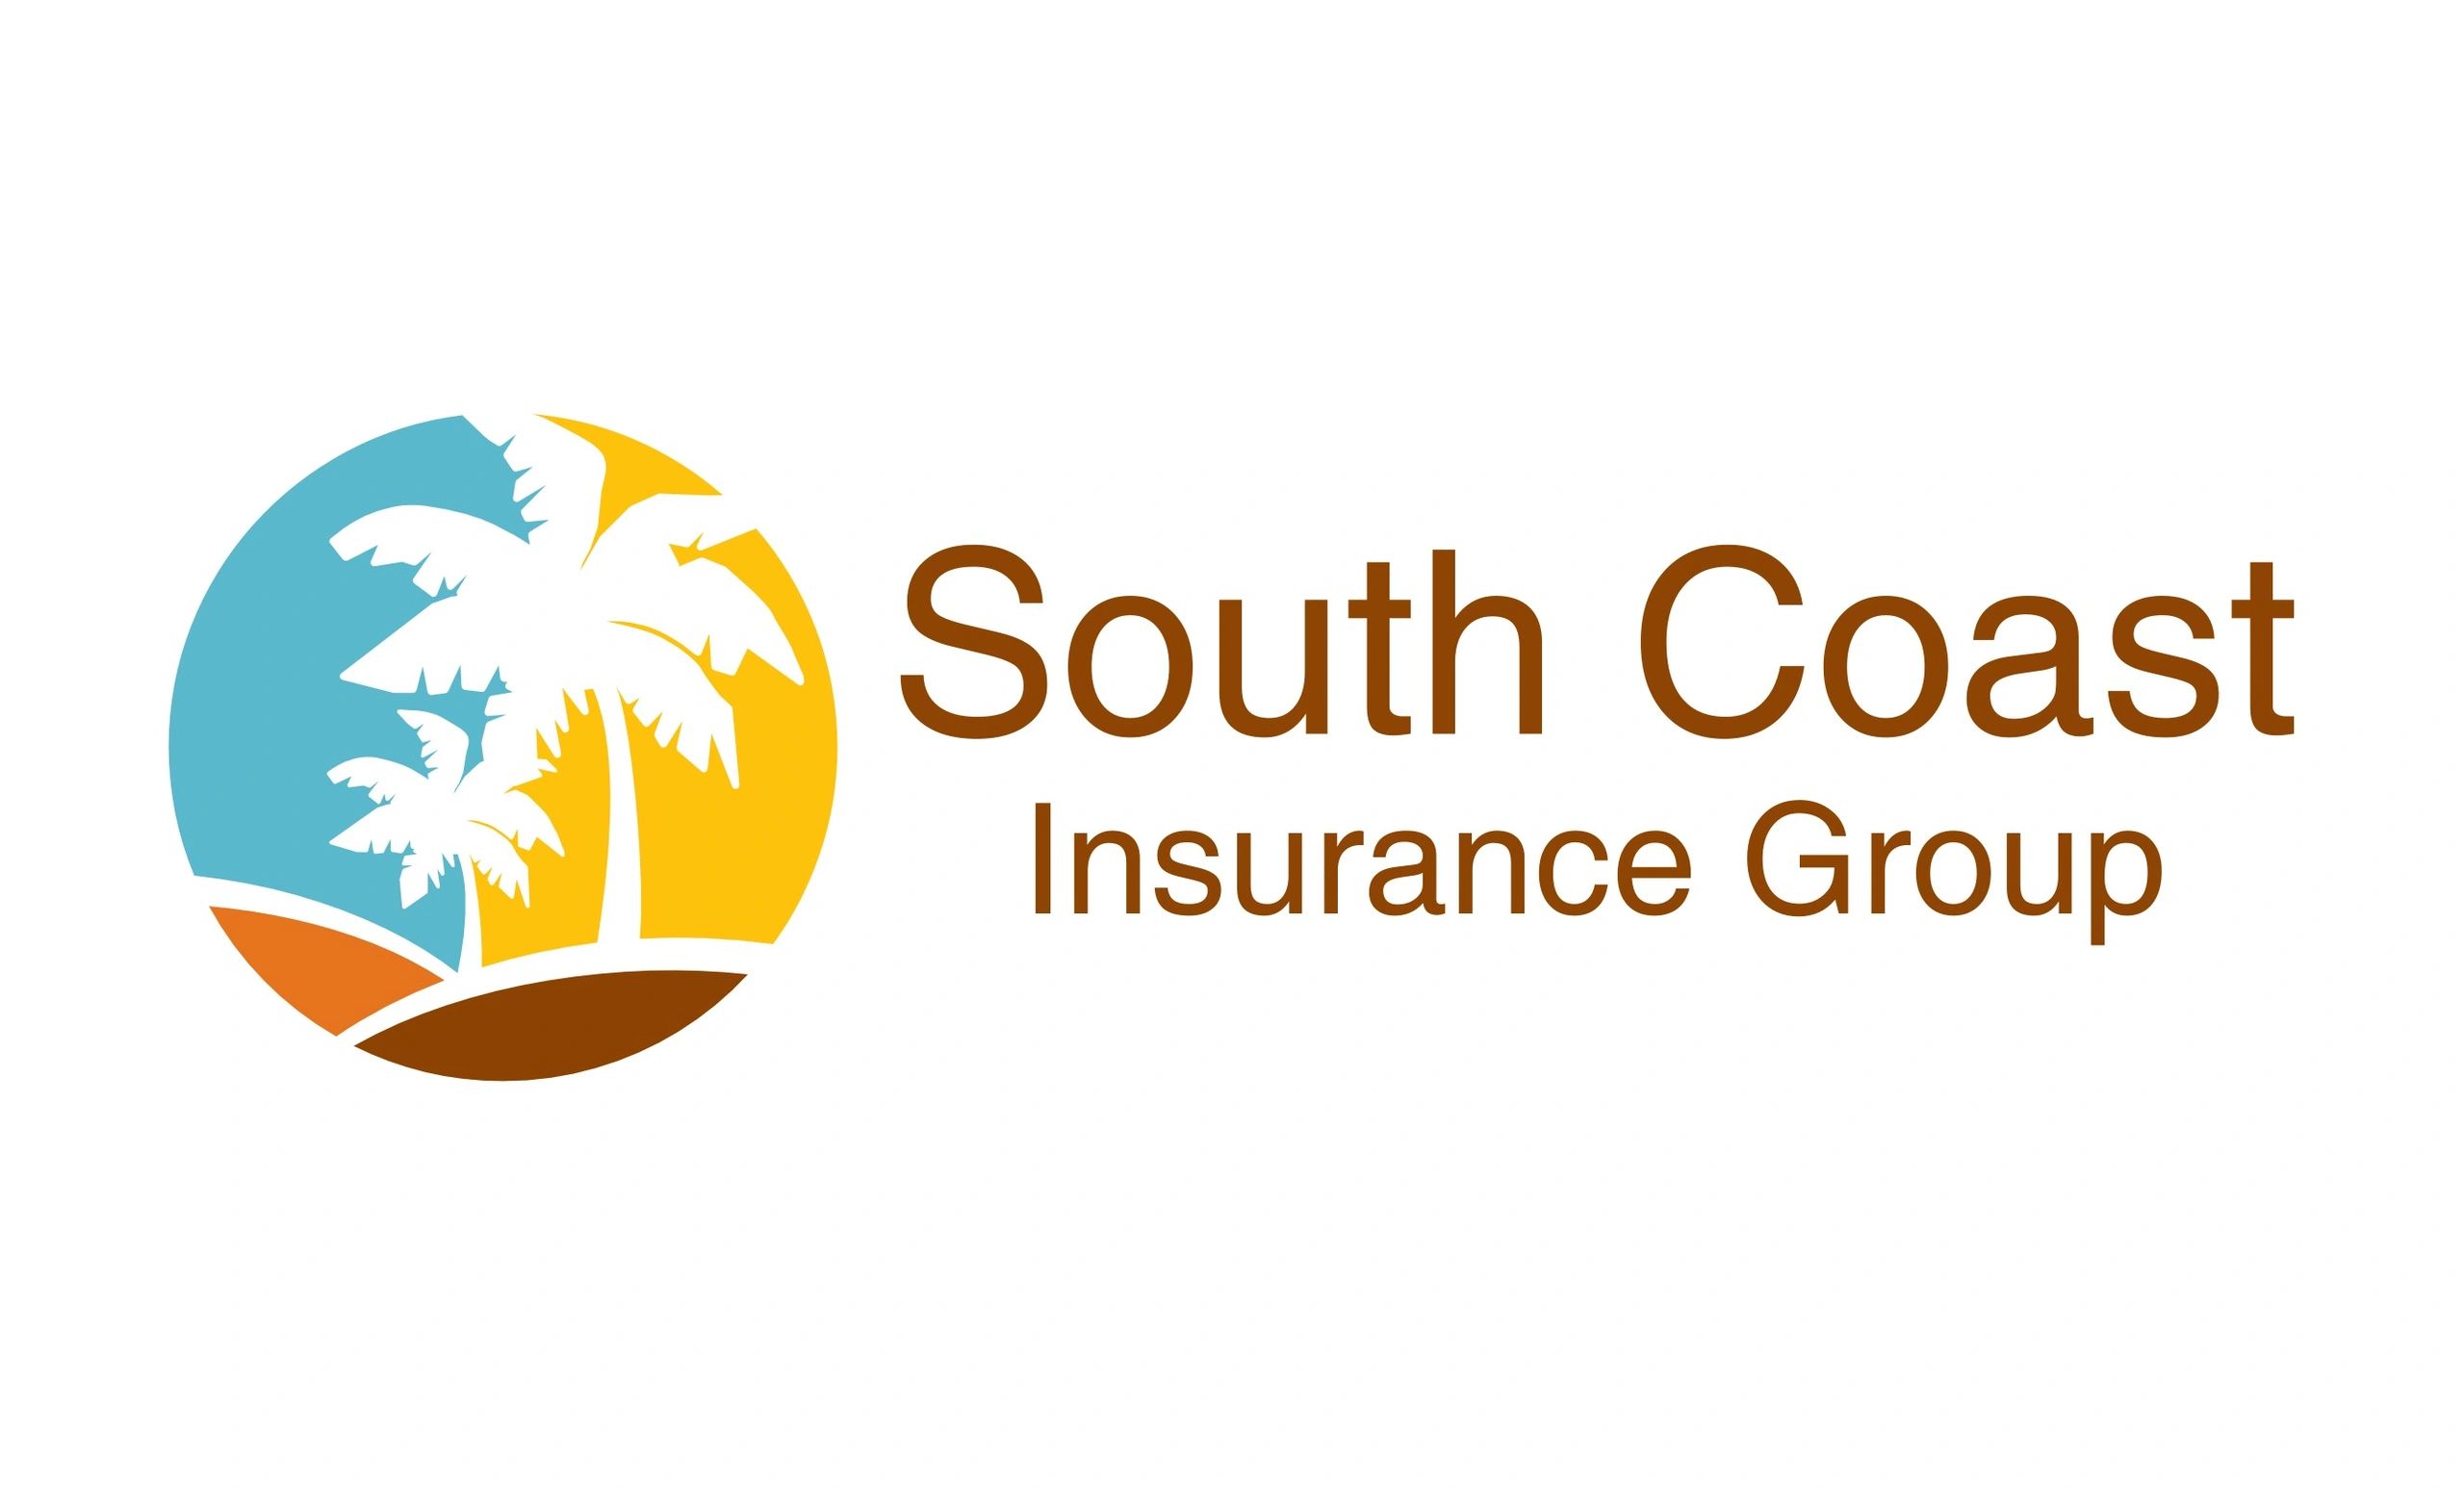 South Coast Insurance Group - Business Insurance